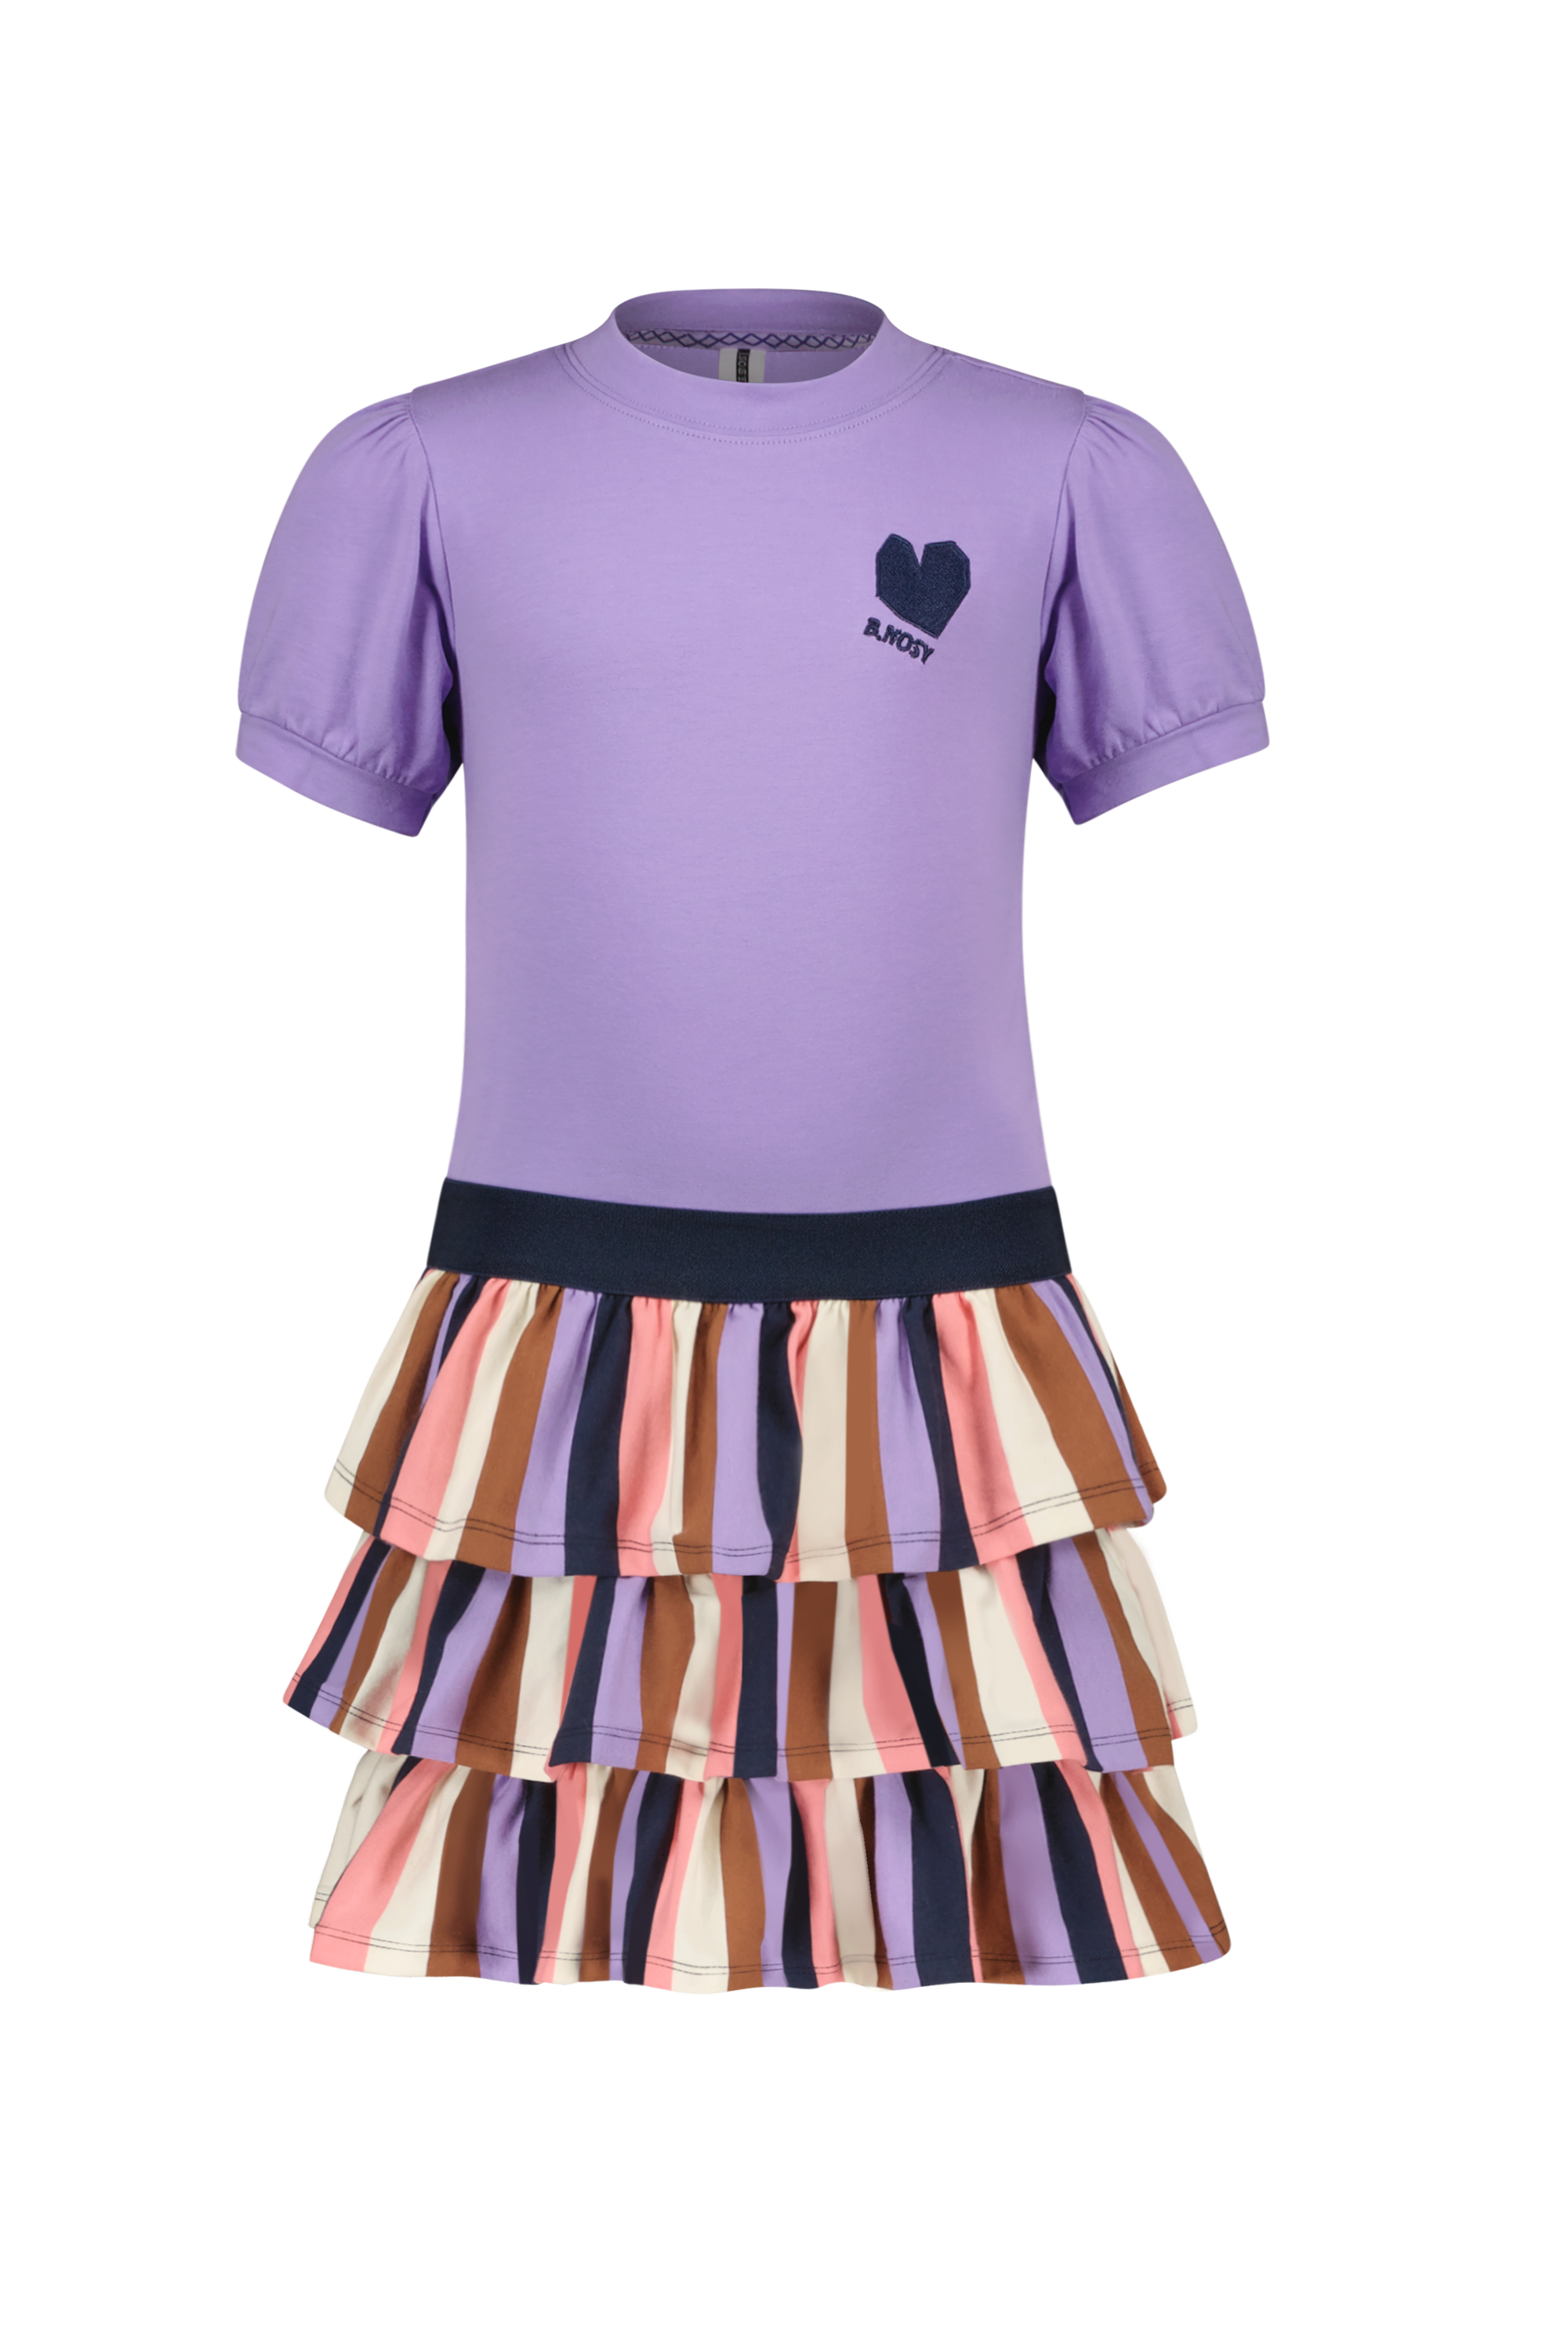 Rok Girls dress w/ lilac puff sleeves top / 3 layers skirt